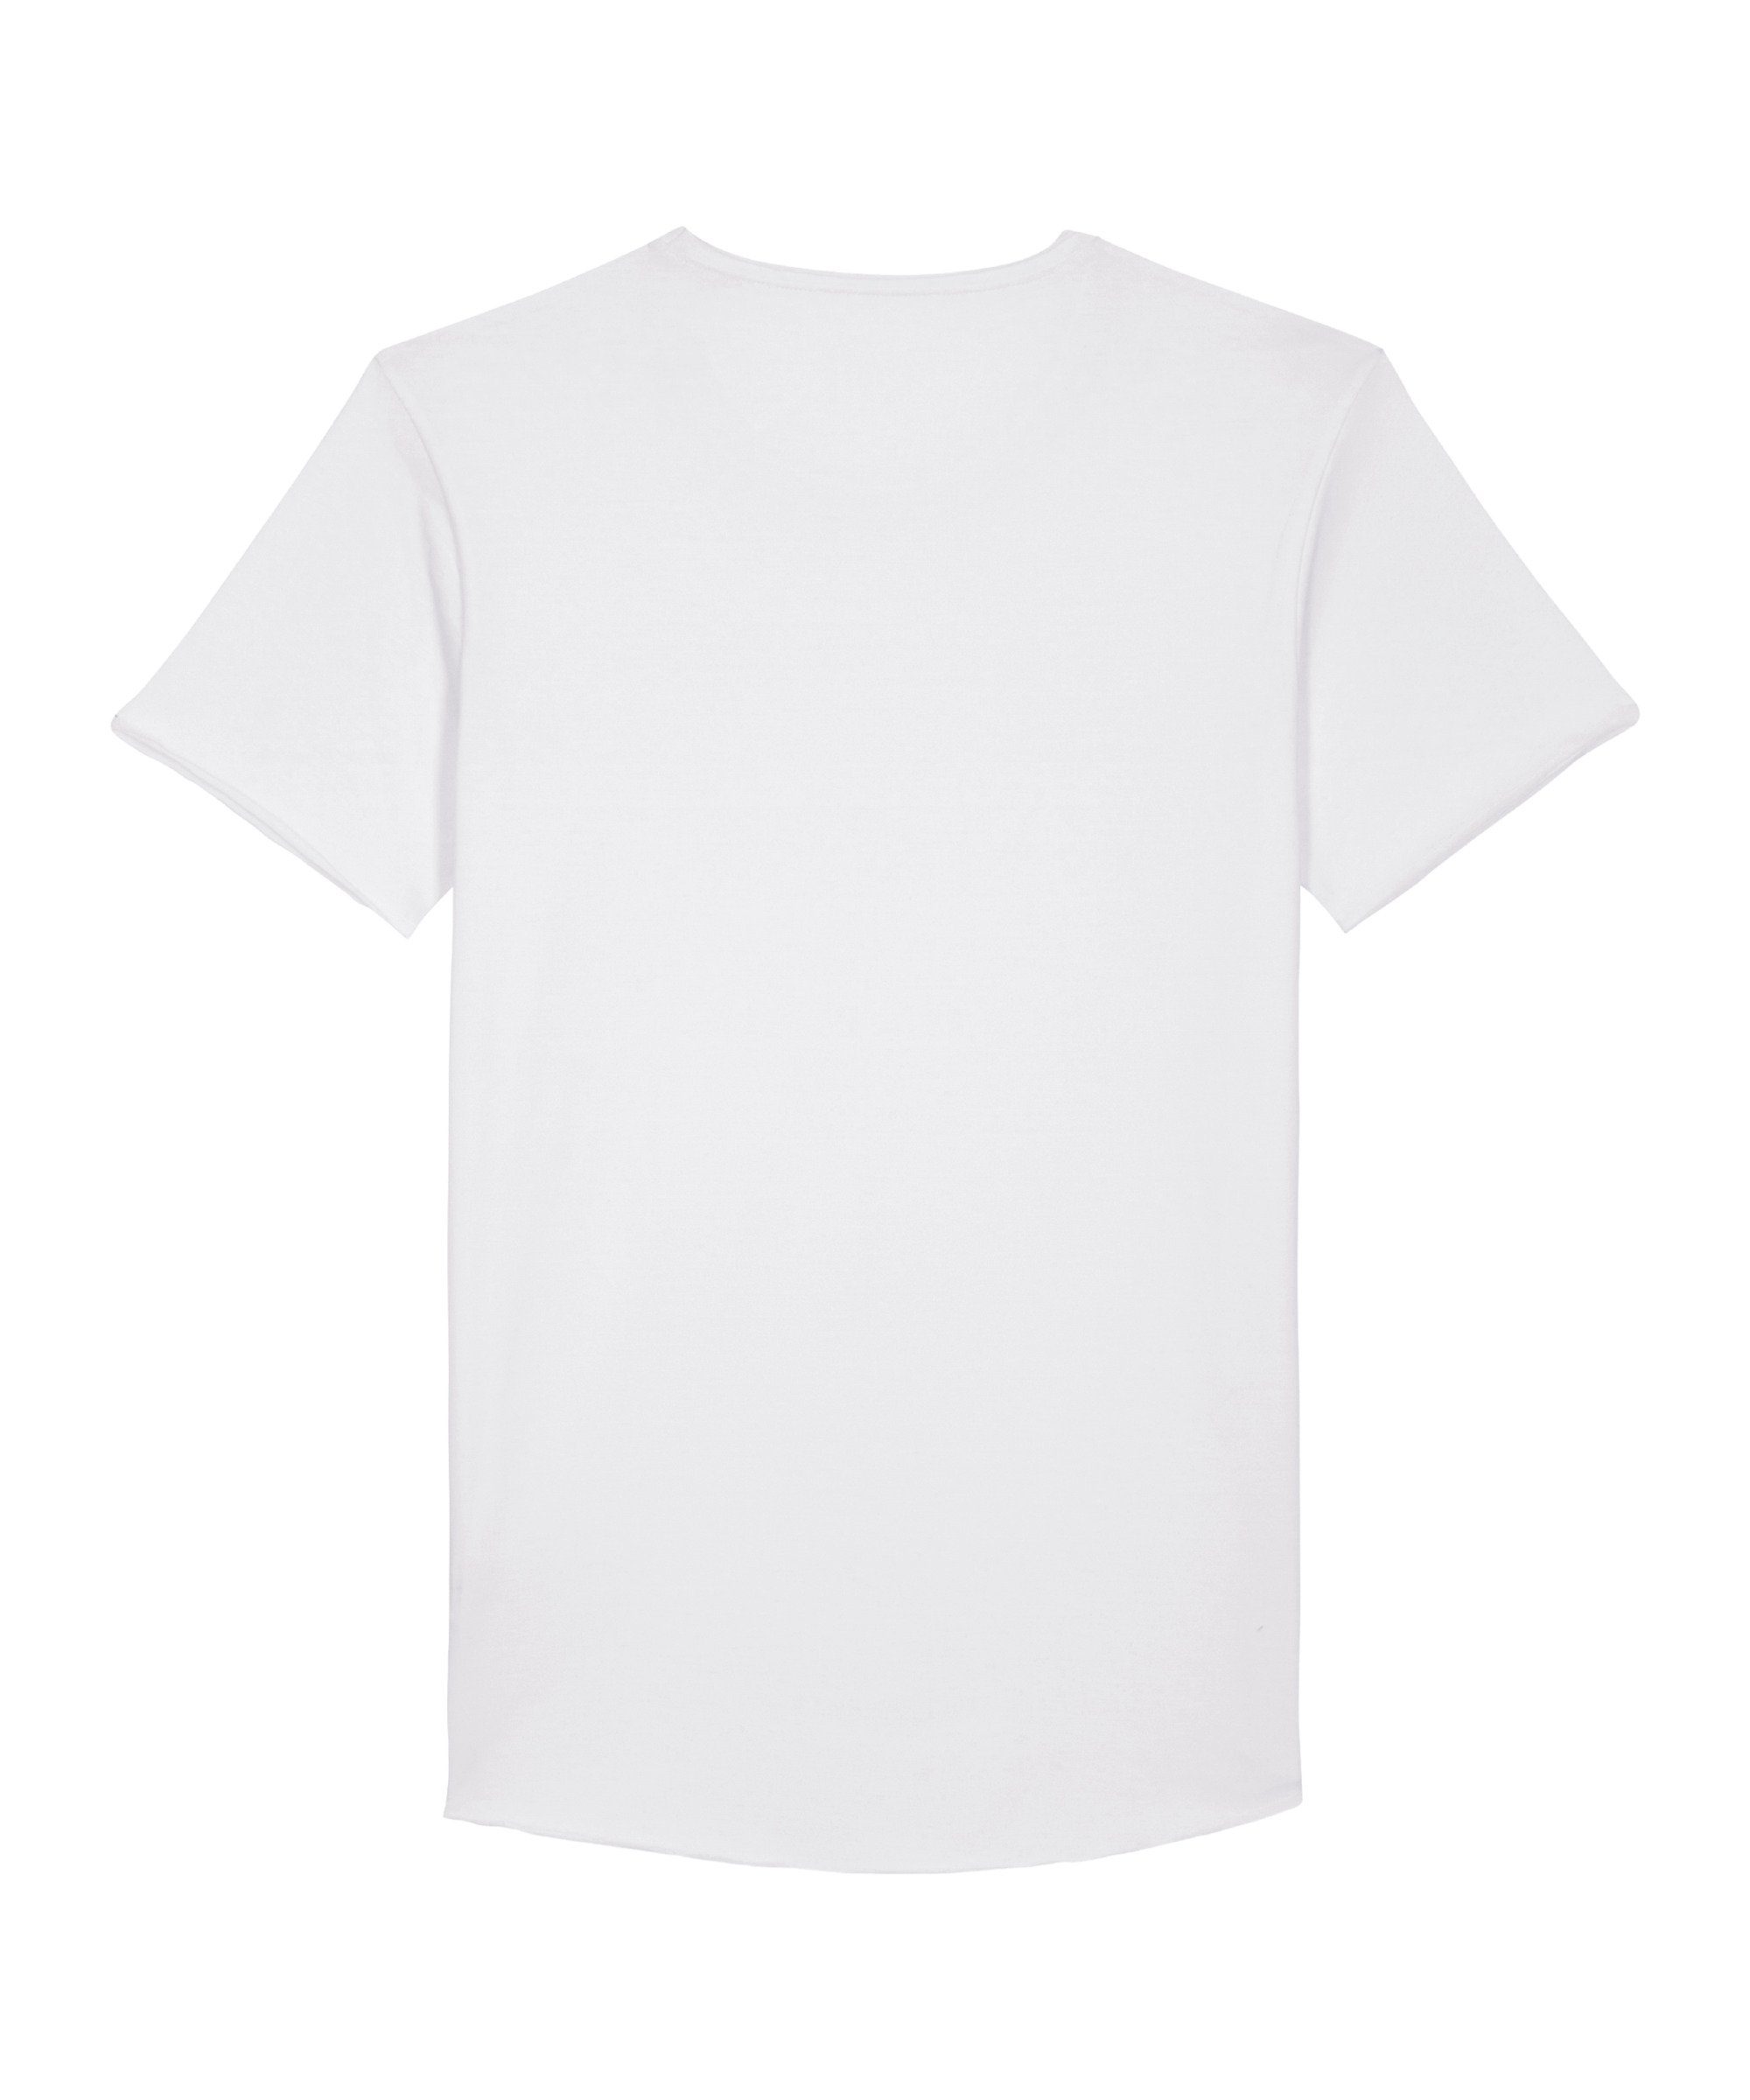 "Friendly" Nachhaltiges Bolzplatzkind T-Shirt Longshirt Produkt